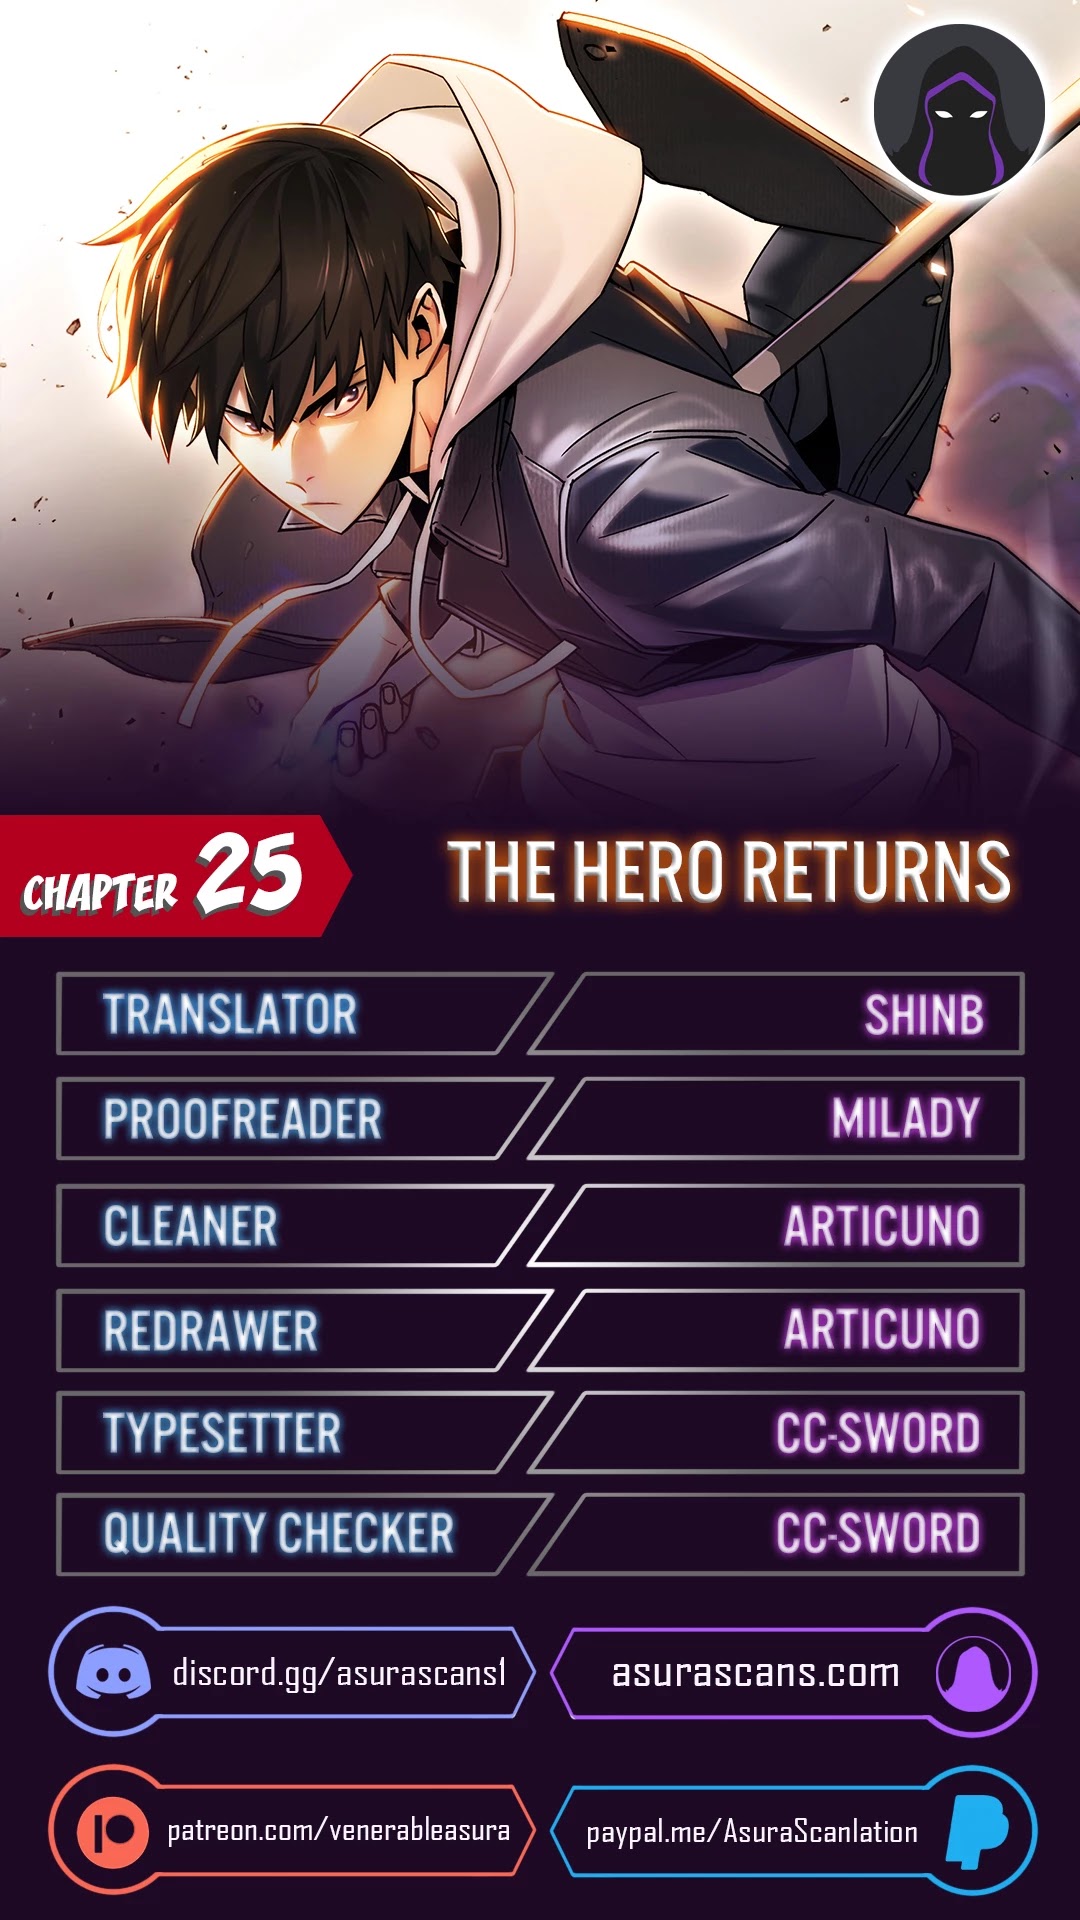 The Hero Returns manga, read The Hero Returns, The Hero Returns anime, read The Hero Returns manga